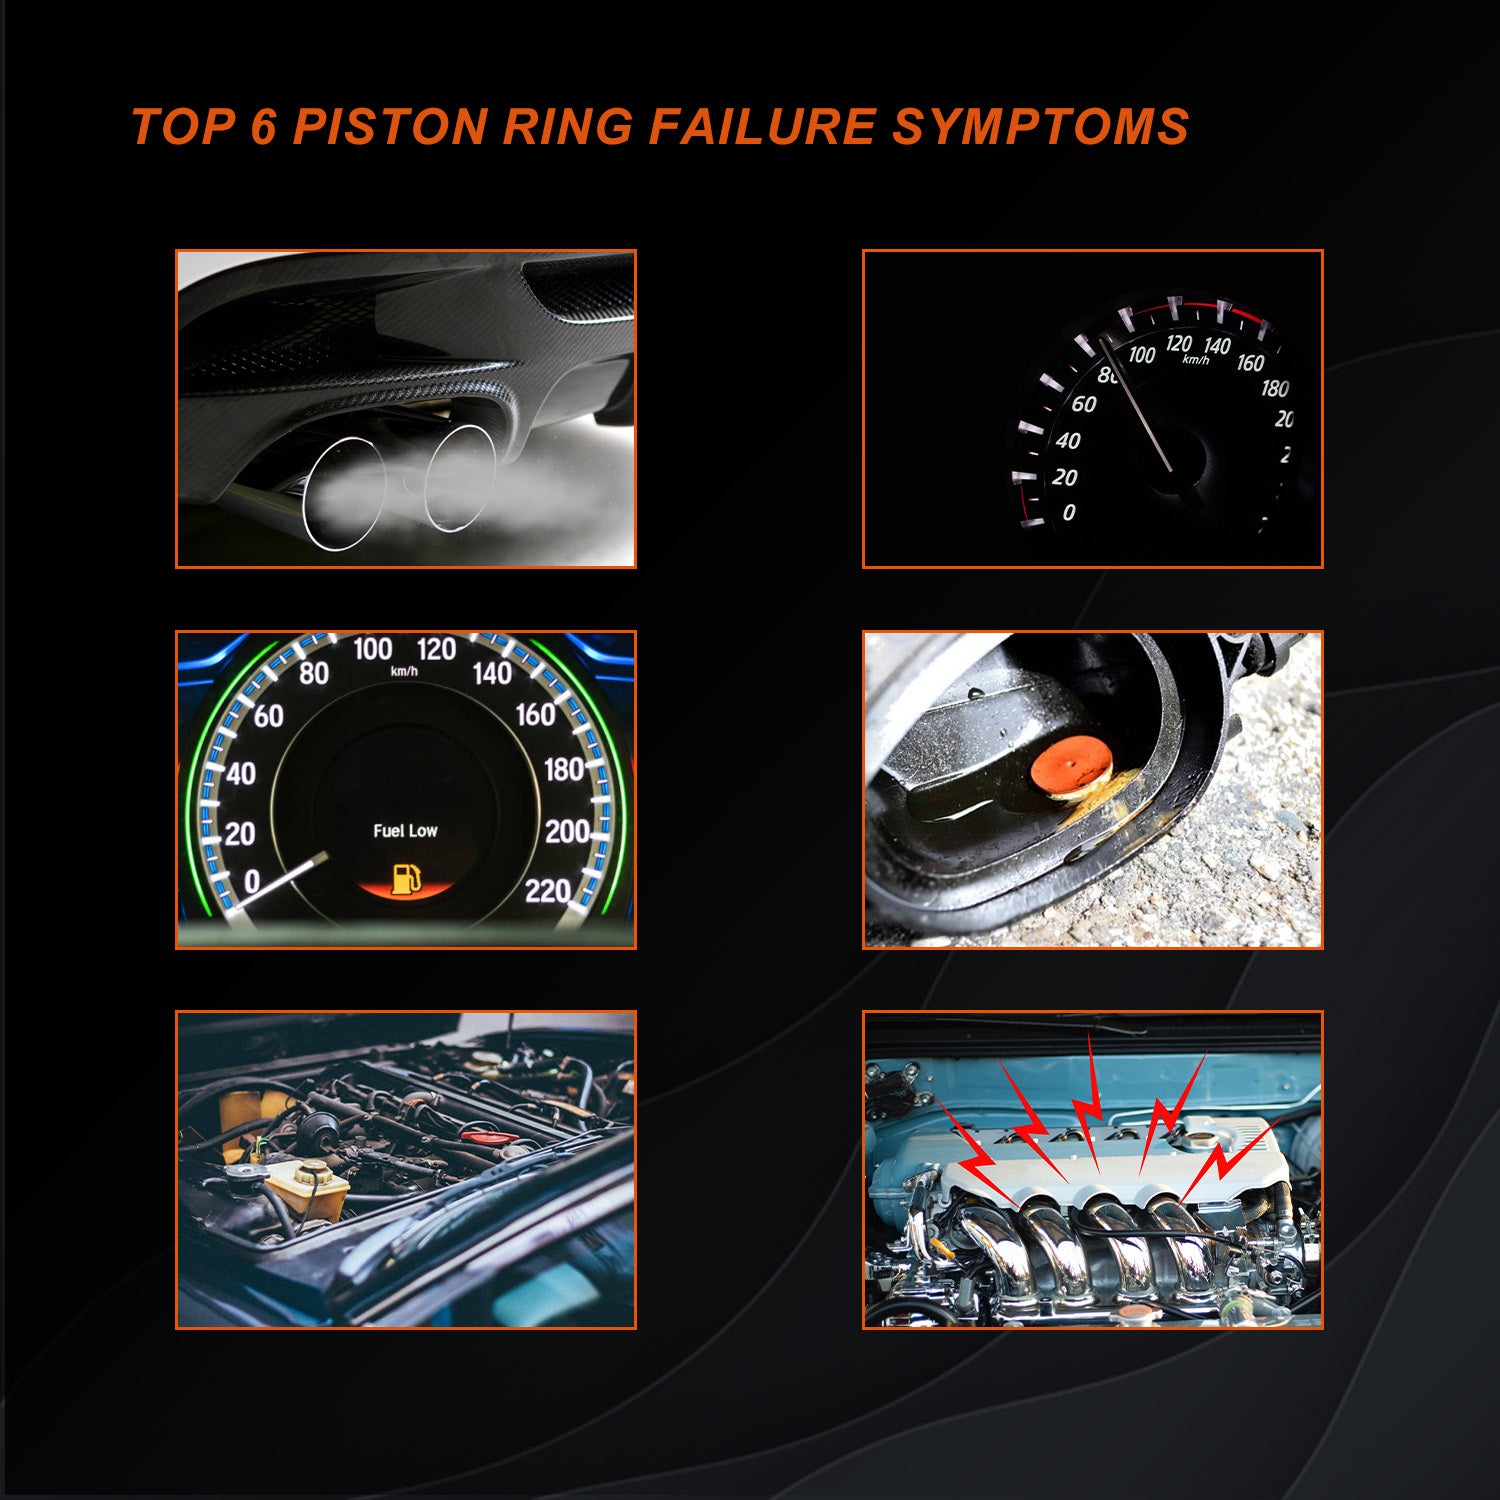 Top 6 Piston Ring Failure Symptoms